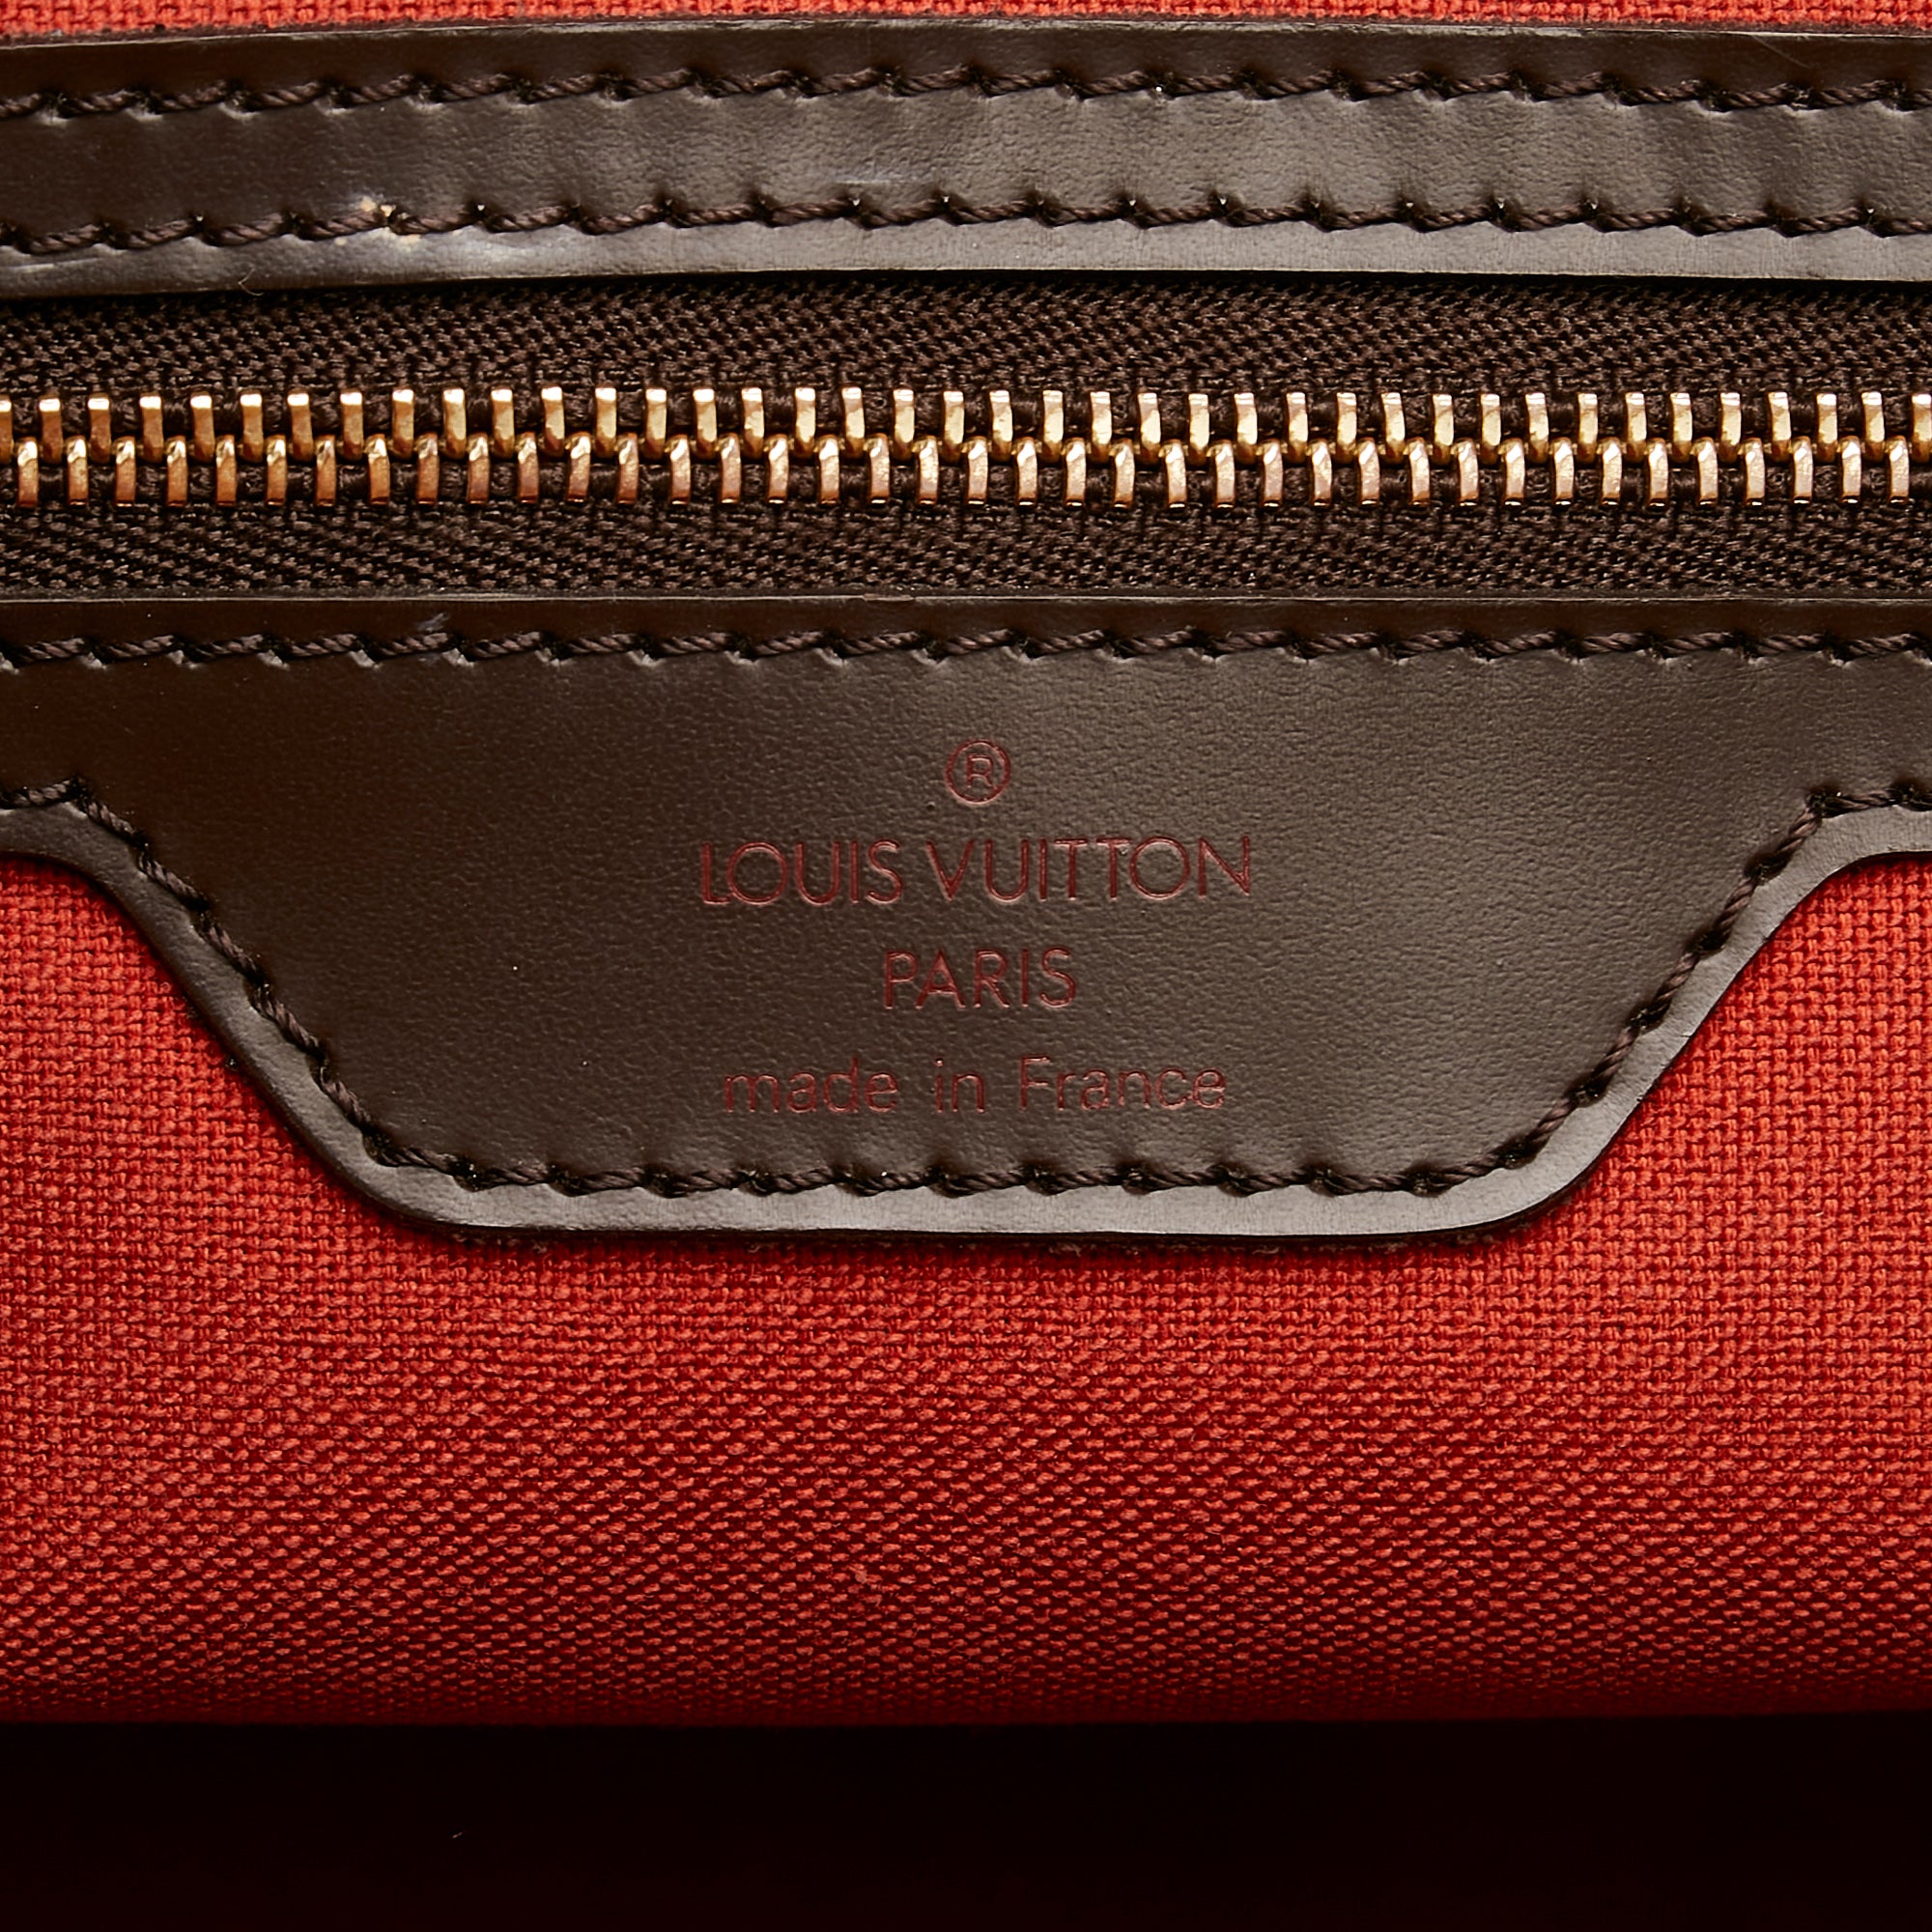 My Louis Vuitton Collection Part 15--Damier Ebene Chelsea Tote Bag